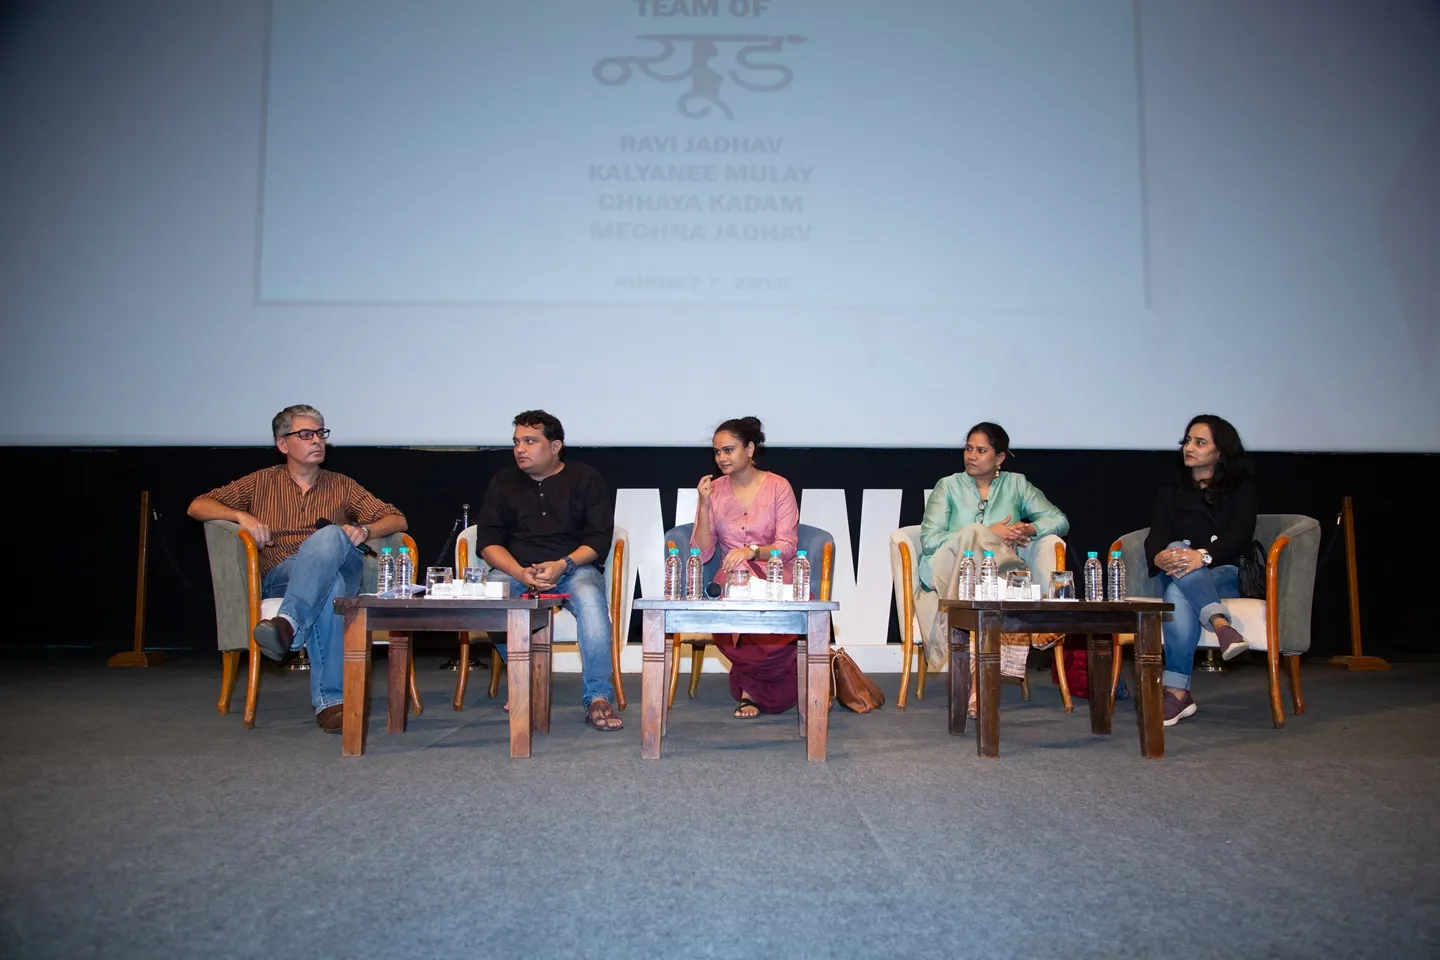 Ravi Jadhav, Kalyanee Mulay, Chhaya Kadam, Meghna Jadhav